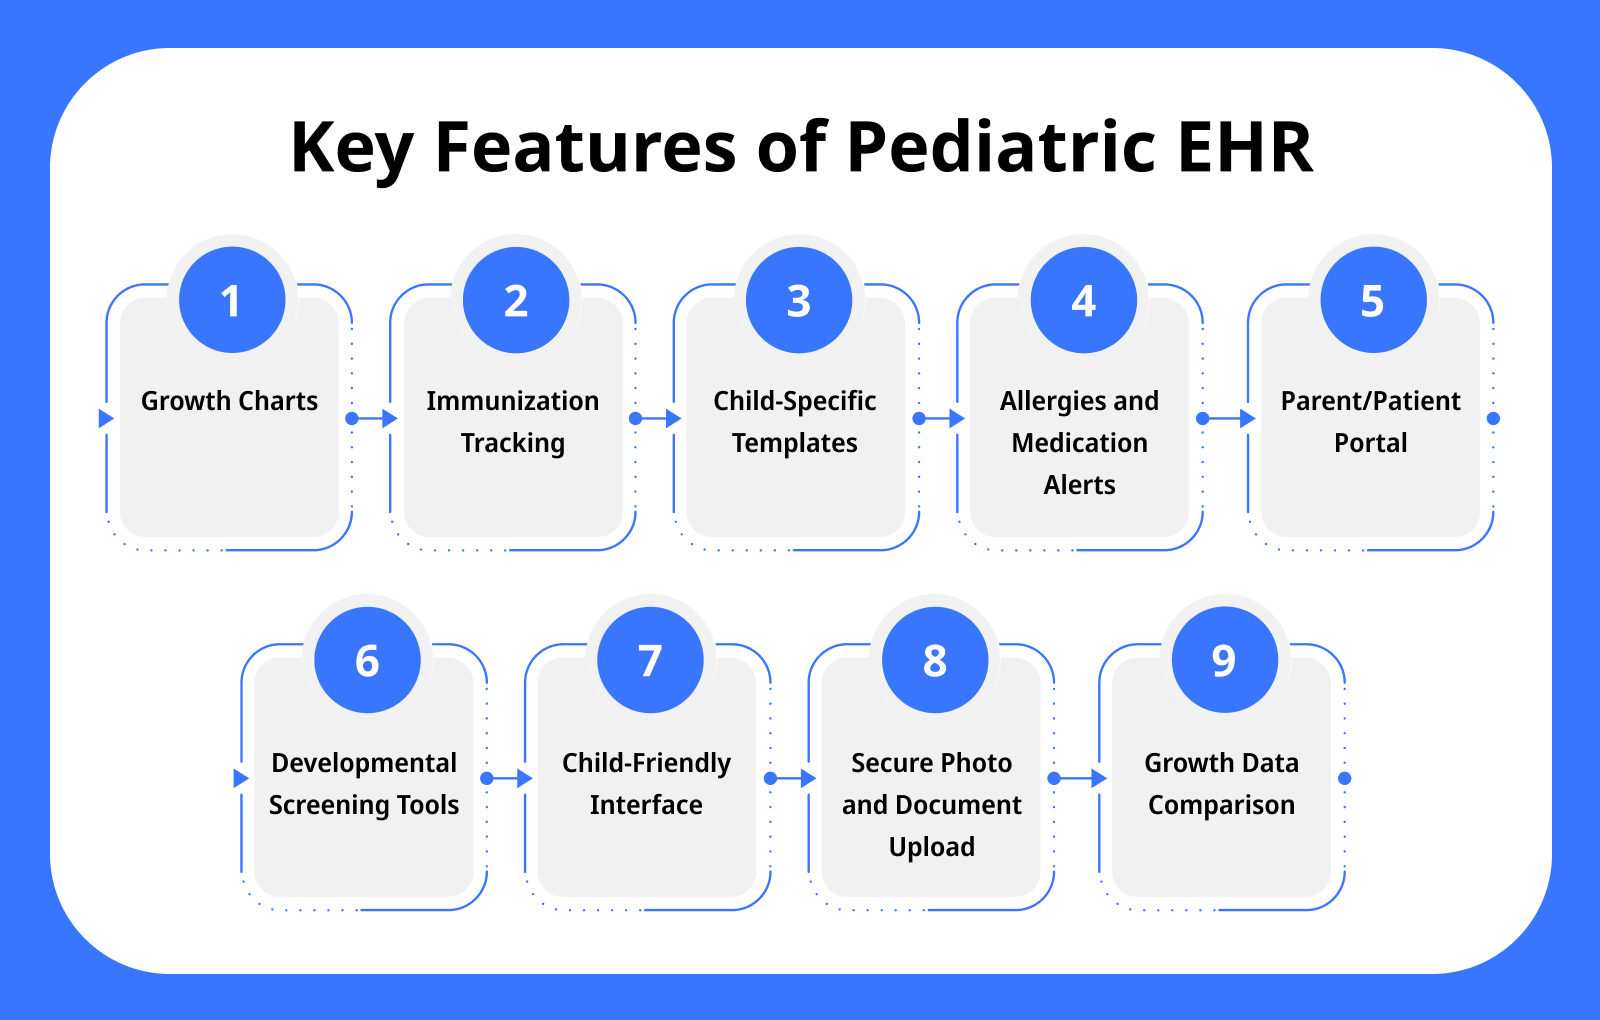 Key Features of Pediatric EHR